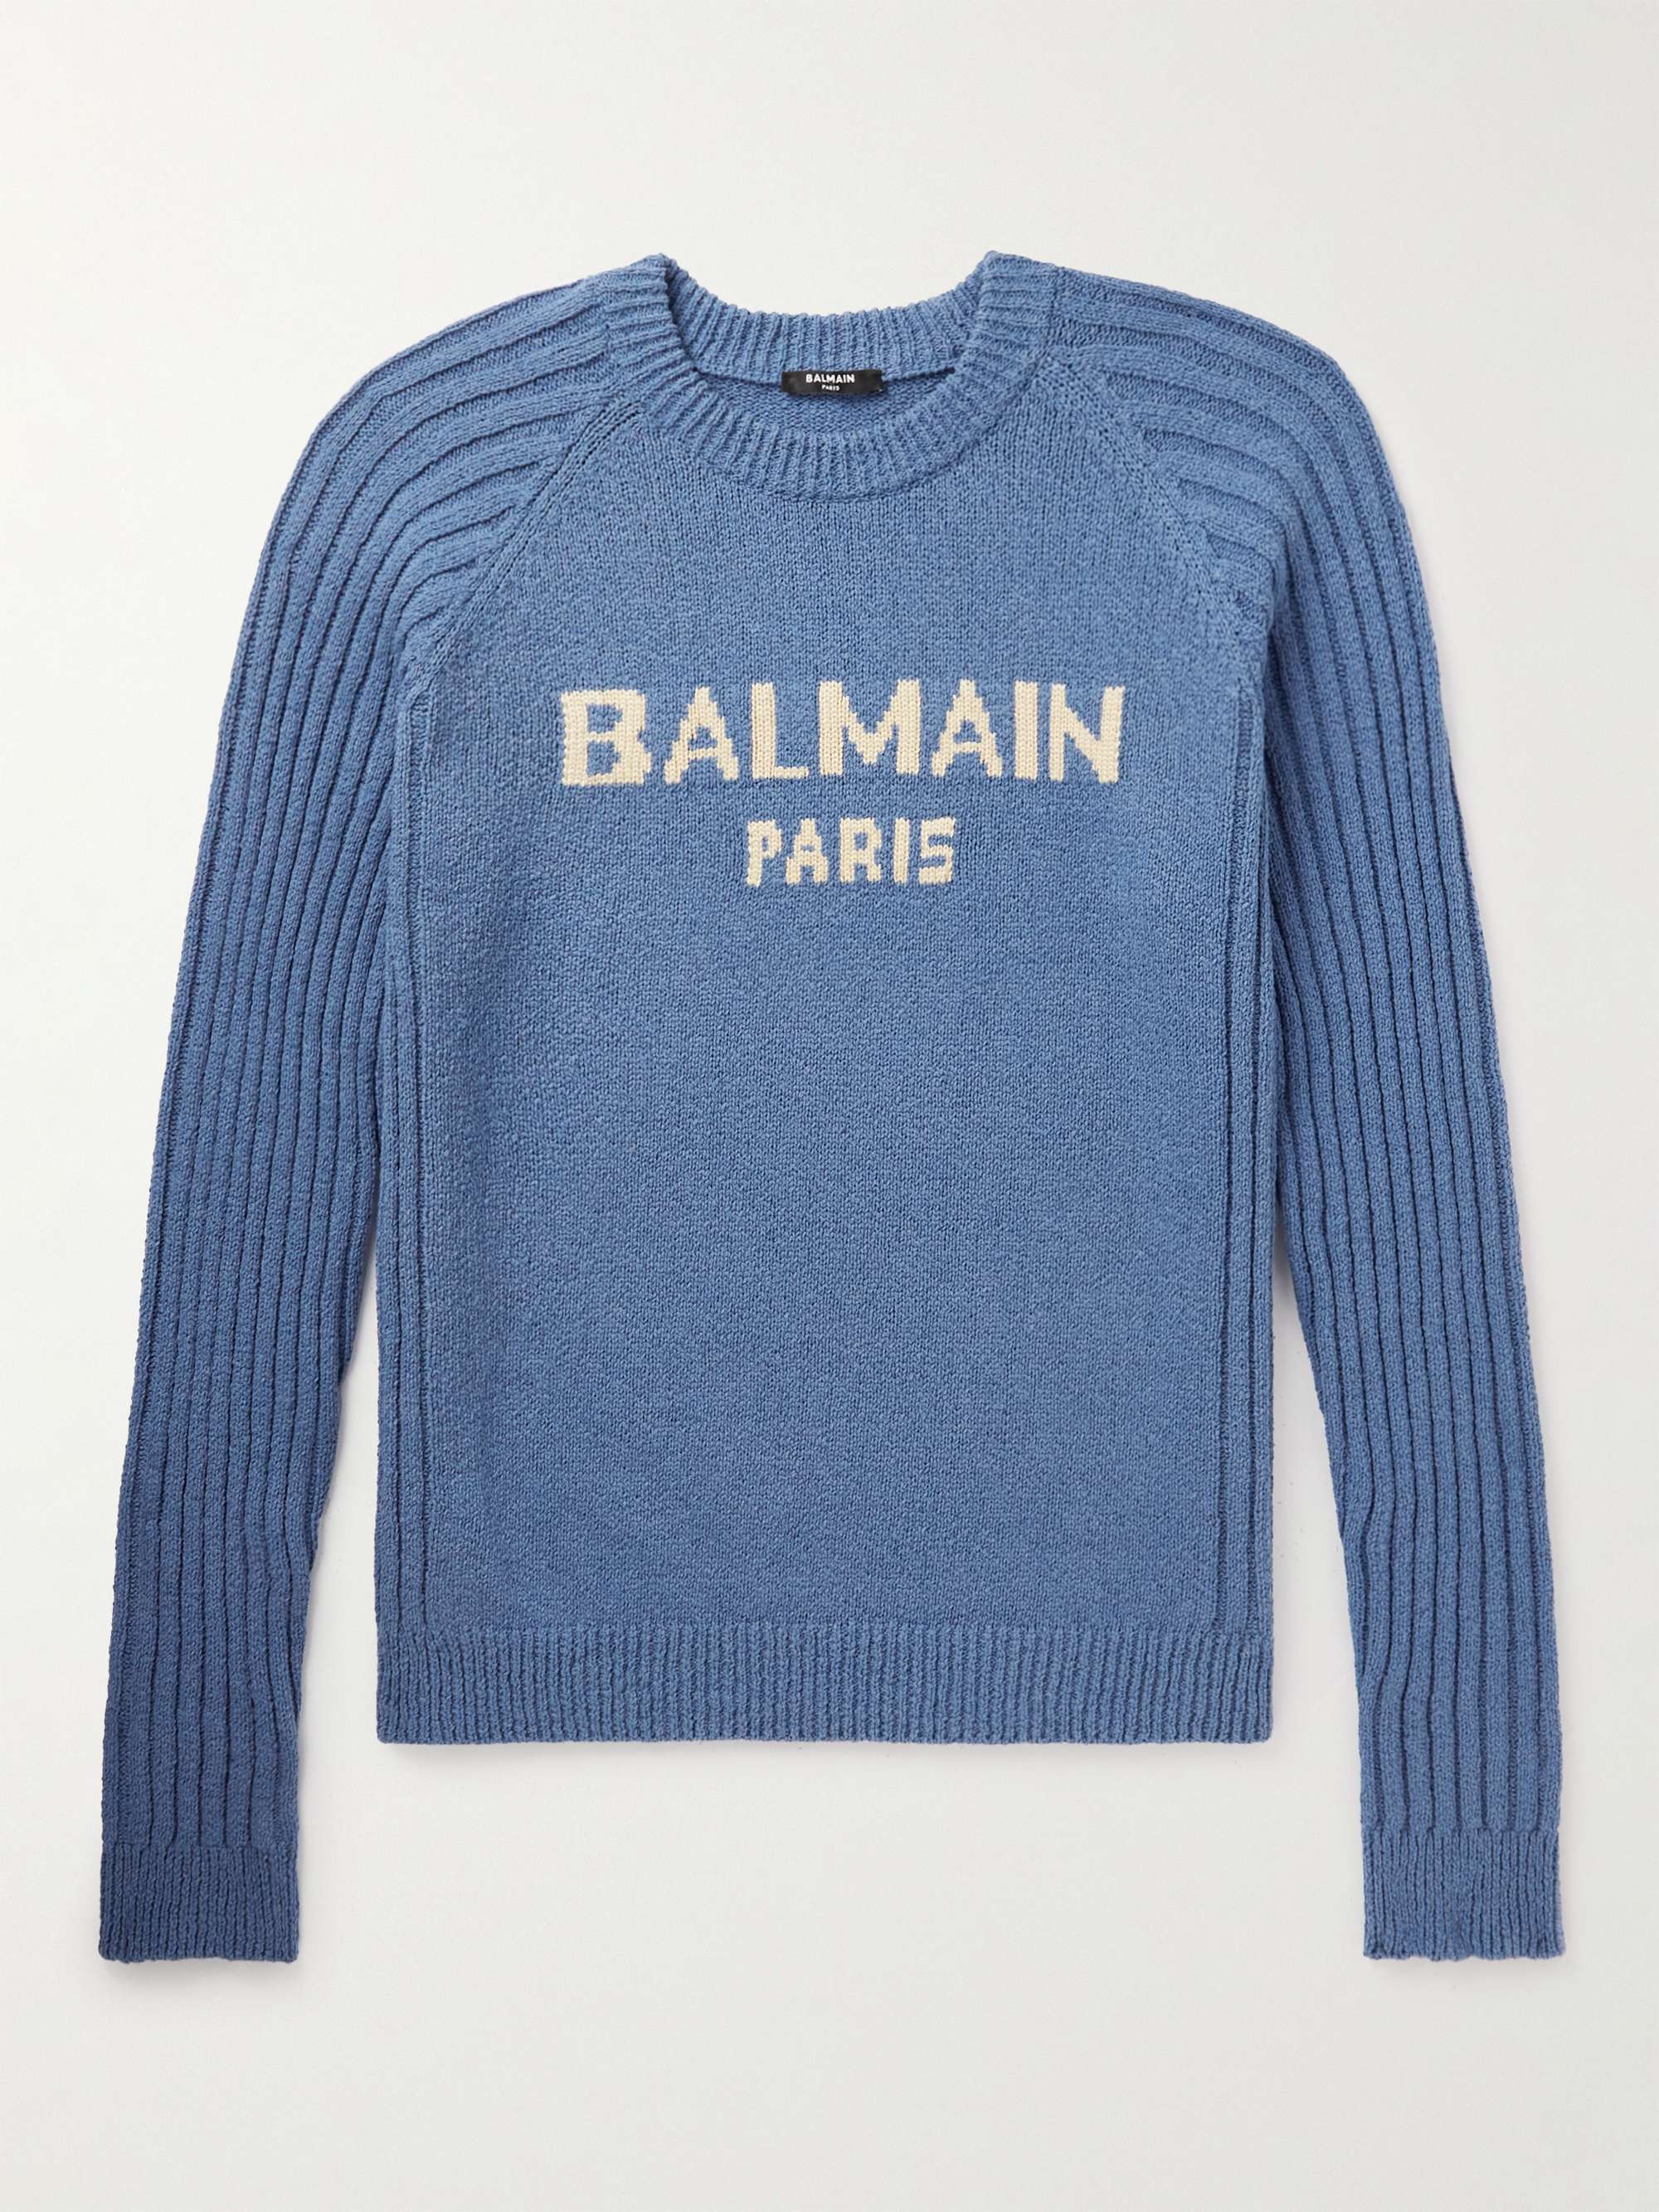 BALMAIN Logo-Jacquard Cotton-Blend Sweater